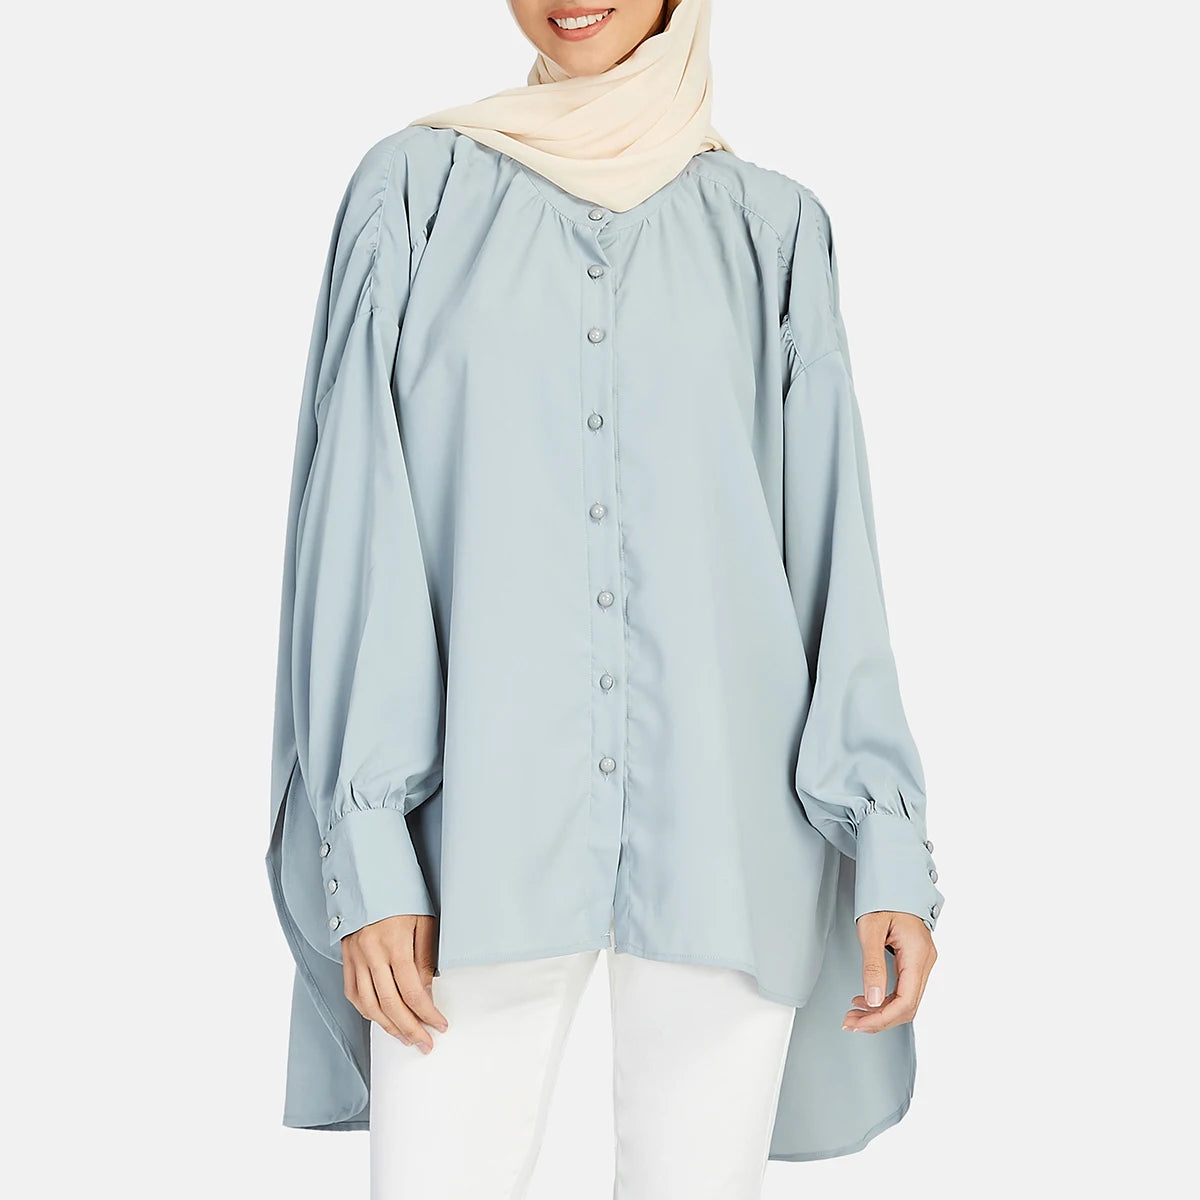 Long Tops for Women Fashion Loose Shirts Muslim Ramadan Islamic Dubai Turkey Elegant Arabic Tunics Plus Size Blouse S-5XL Blusas